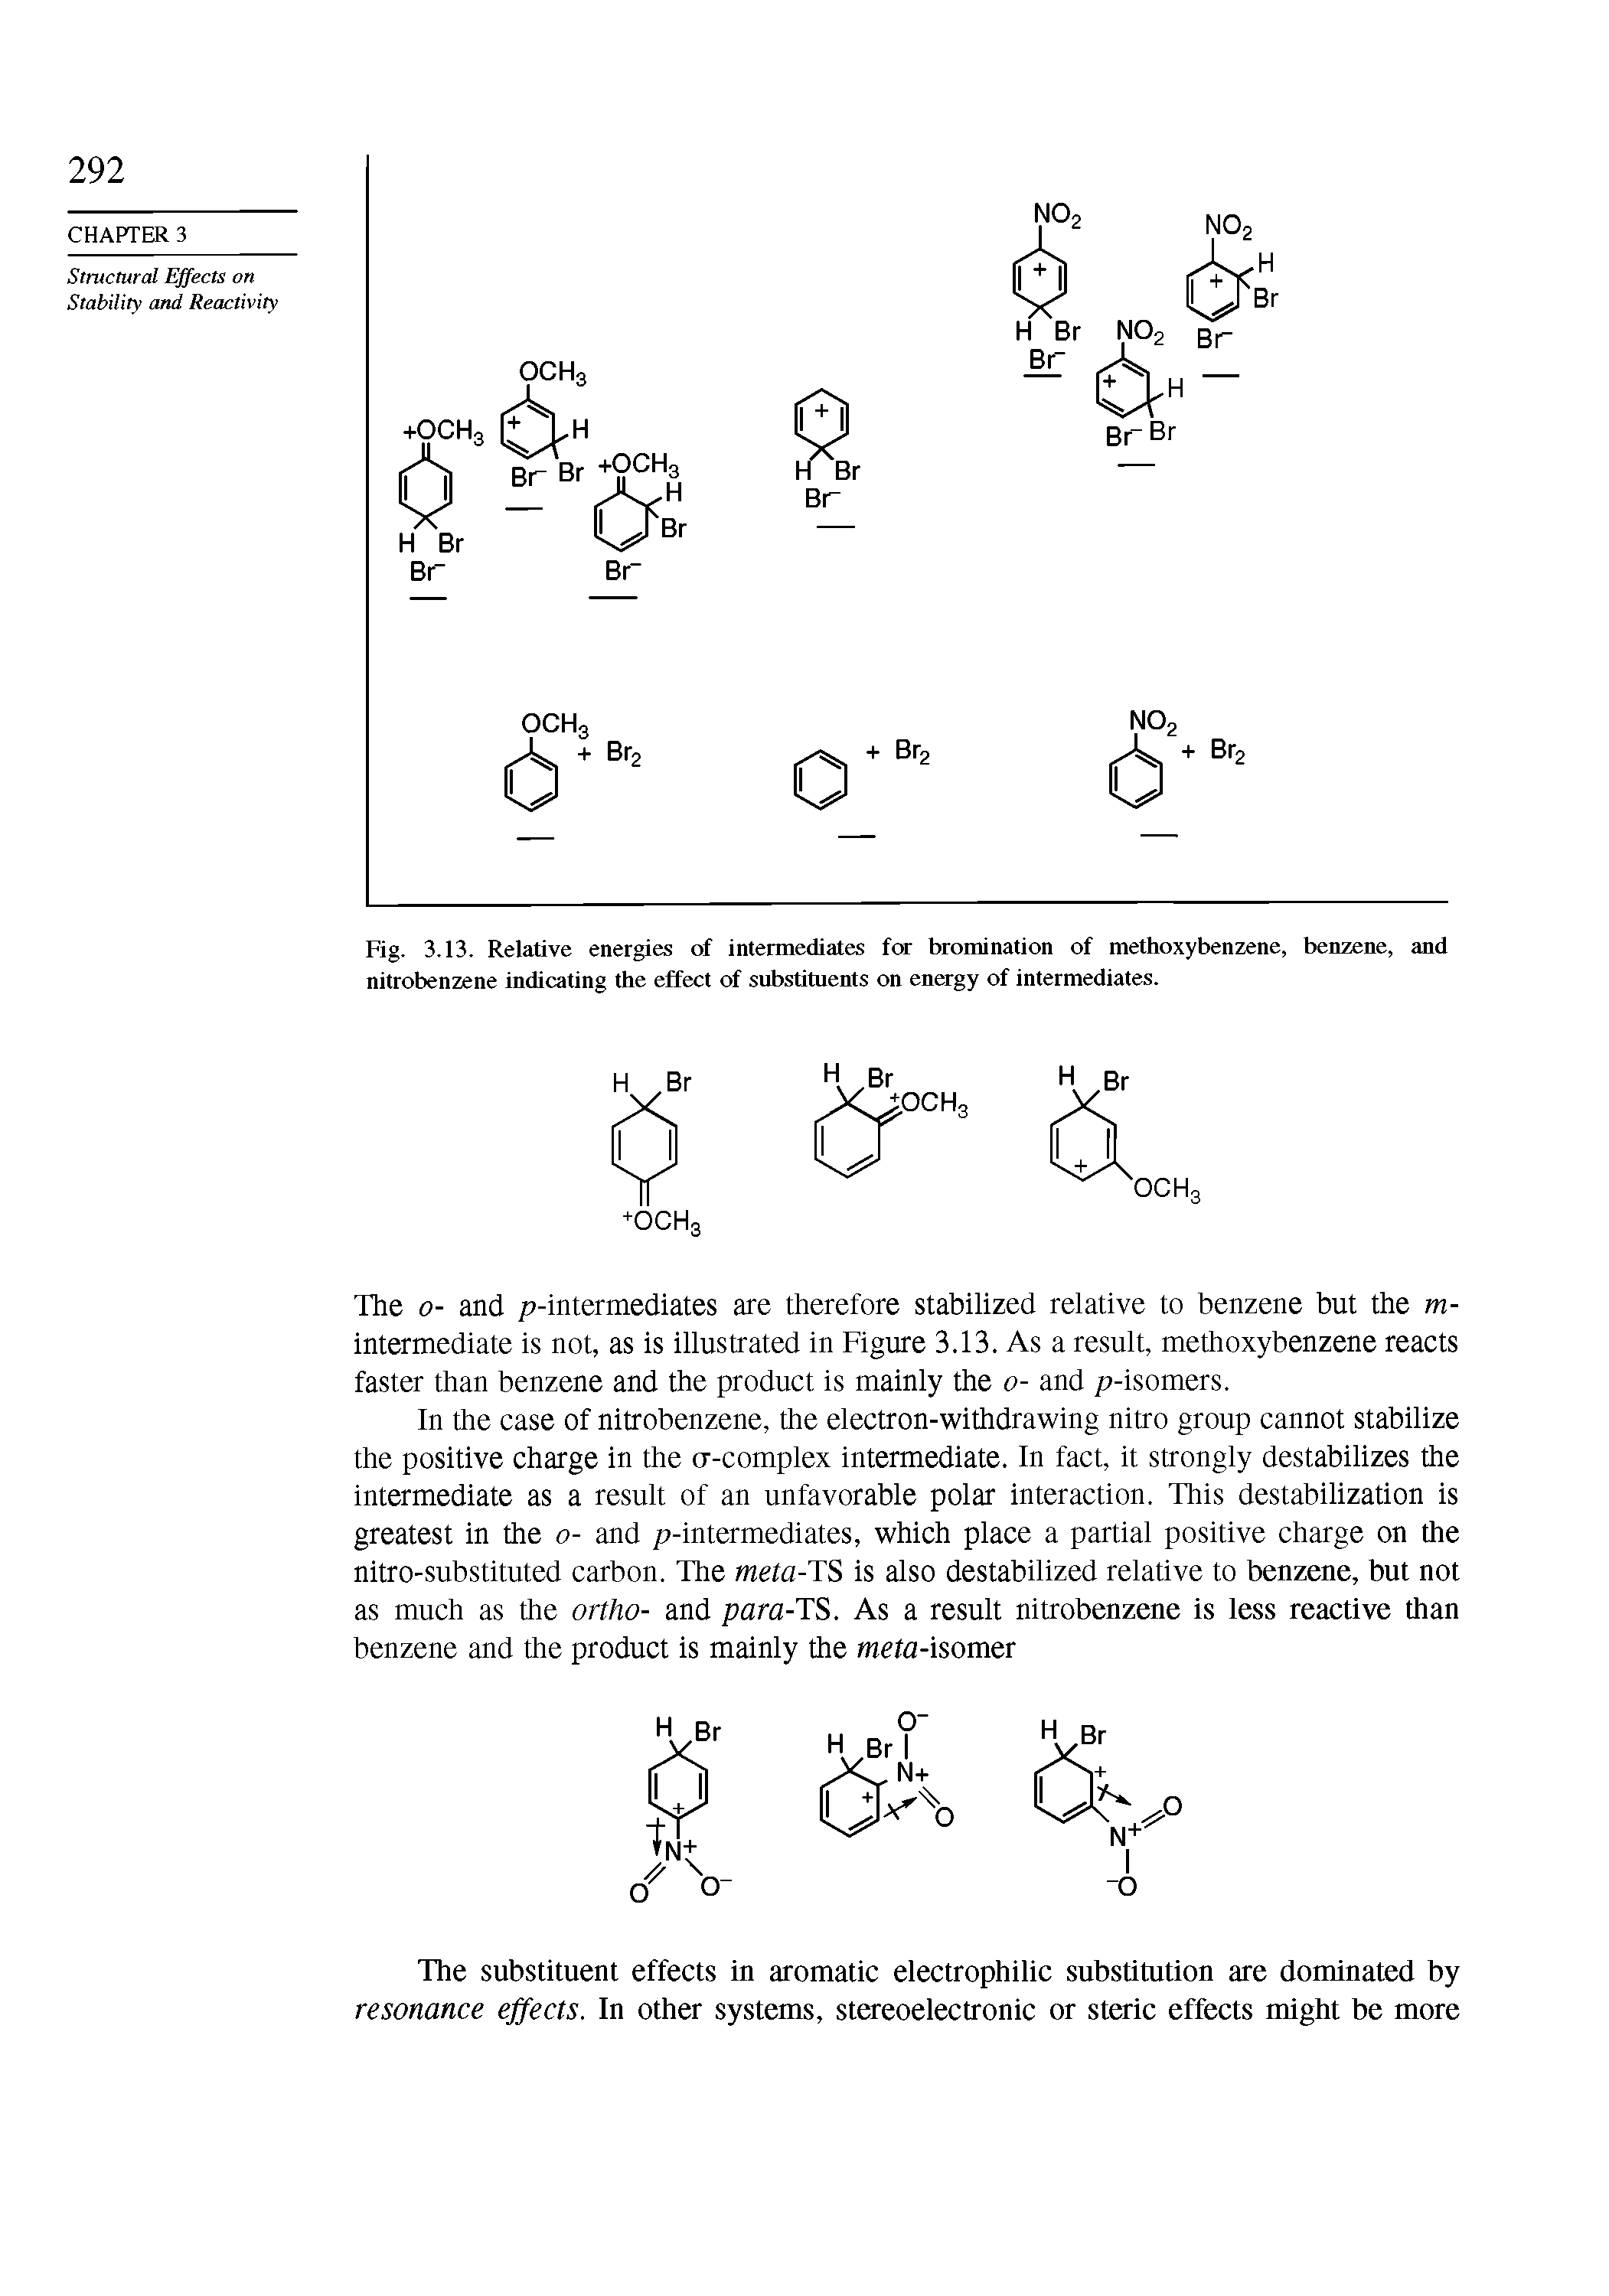 Fig. 3.13. Relative energies of intermediates for bromination of methoxybenzene, benzene, and nitrobenzene indicating the effect of substituents on energy of intermediates.